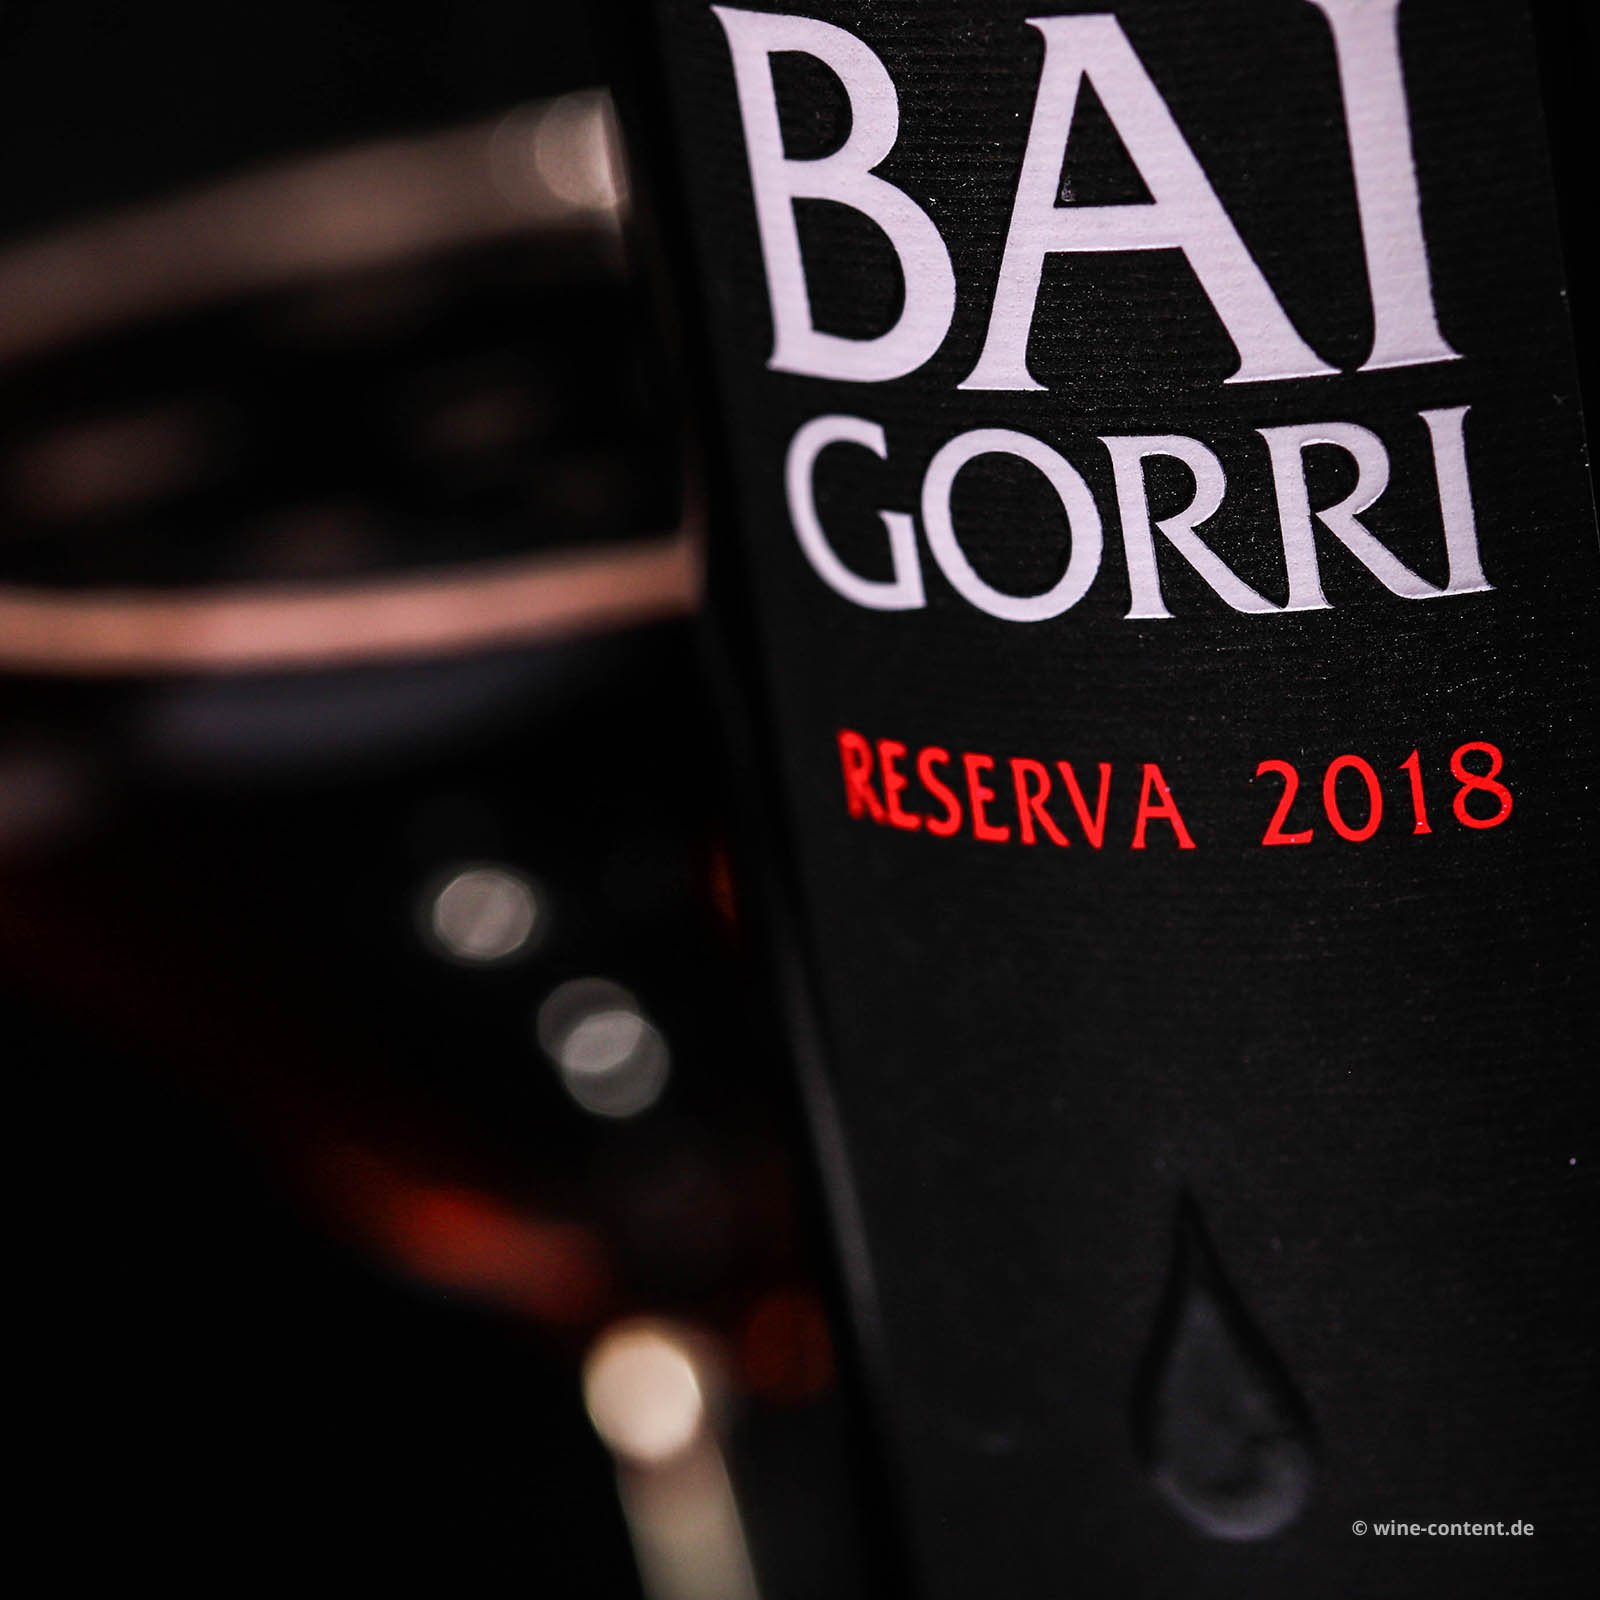 Rioja Reserva 2018